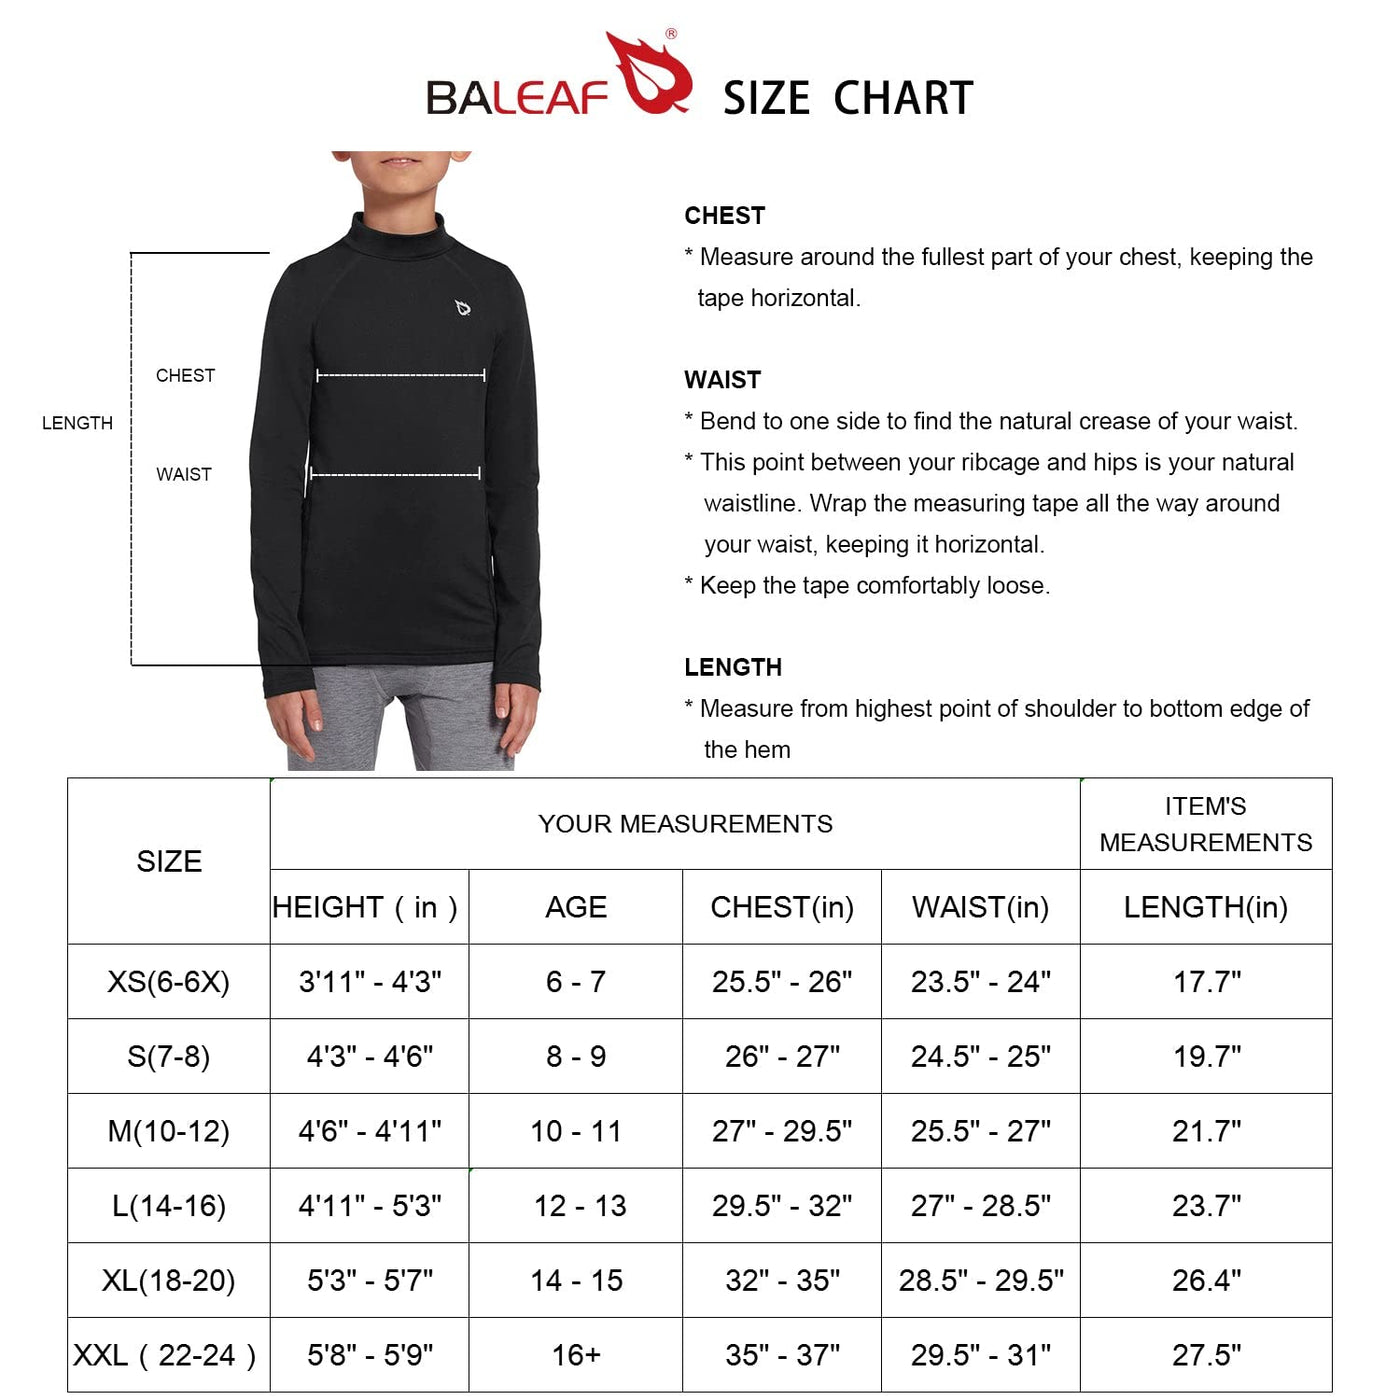 BALEAF Youth Boys Thermal Compression Sports Shirts Long Sleeve